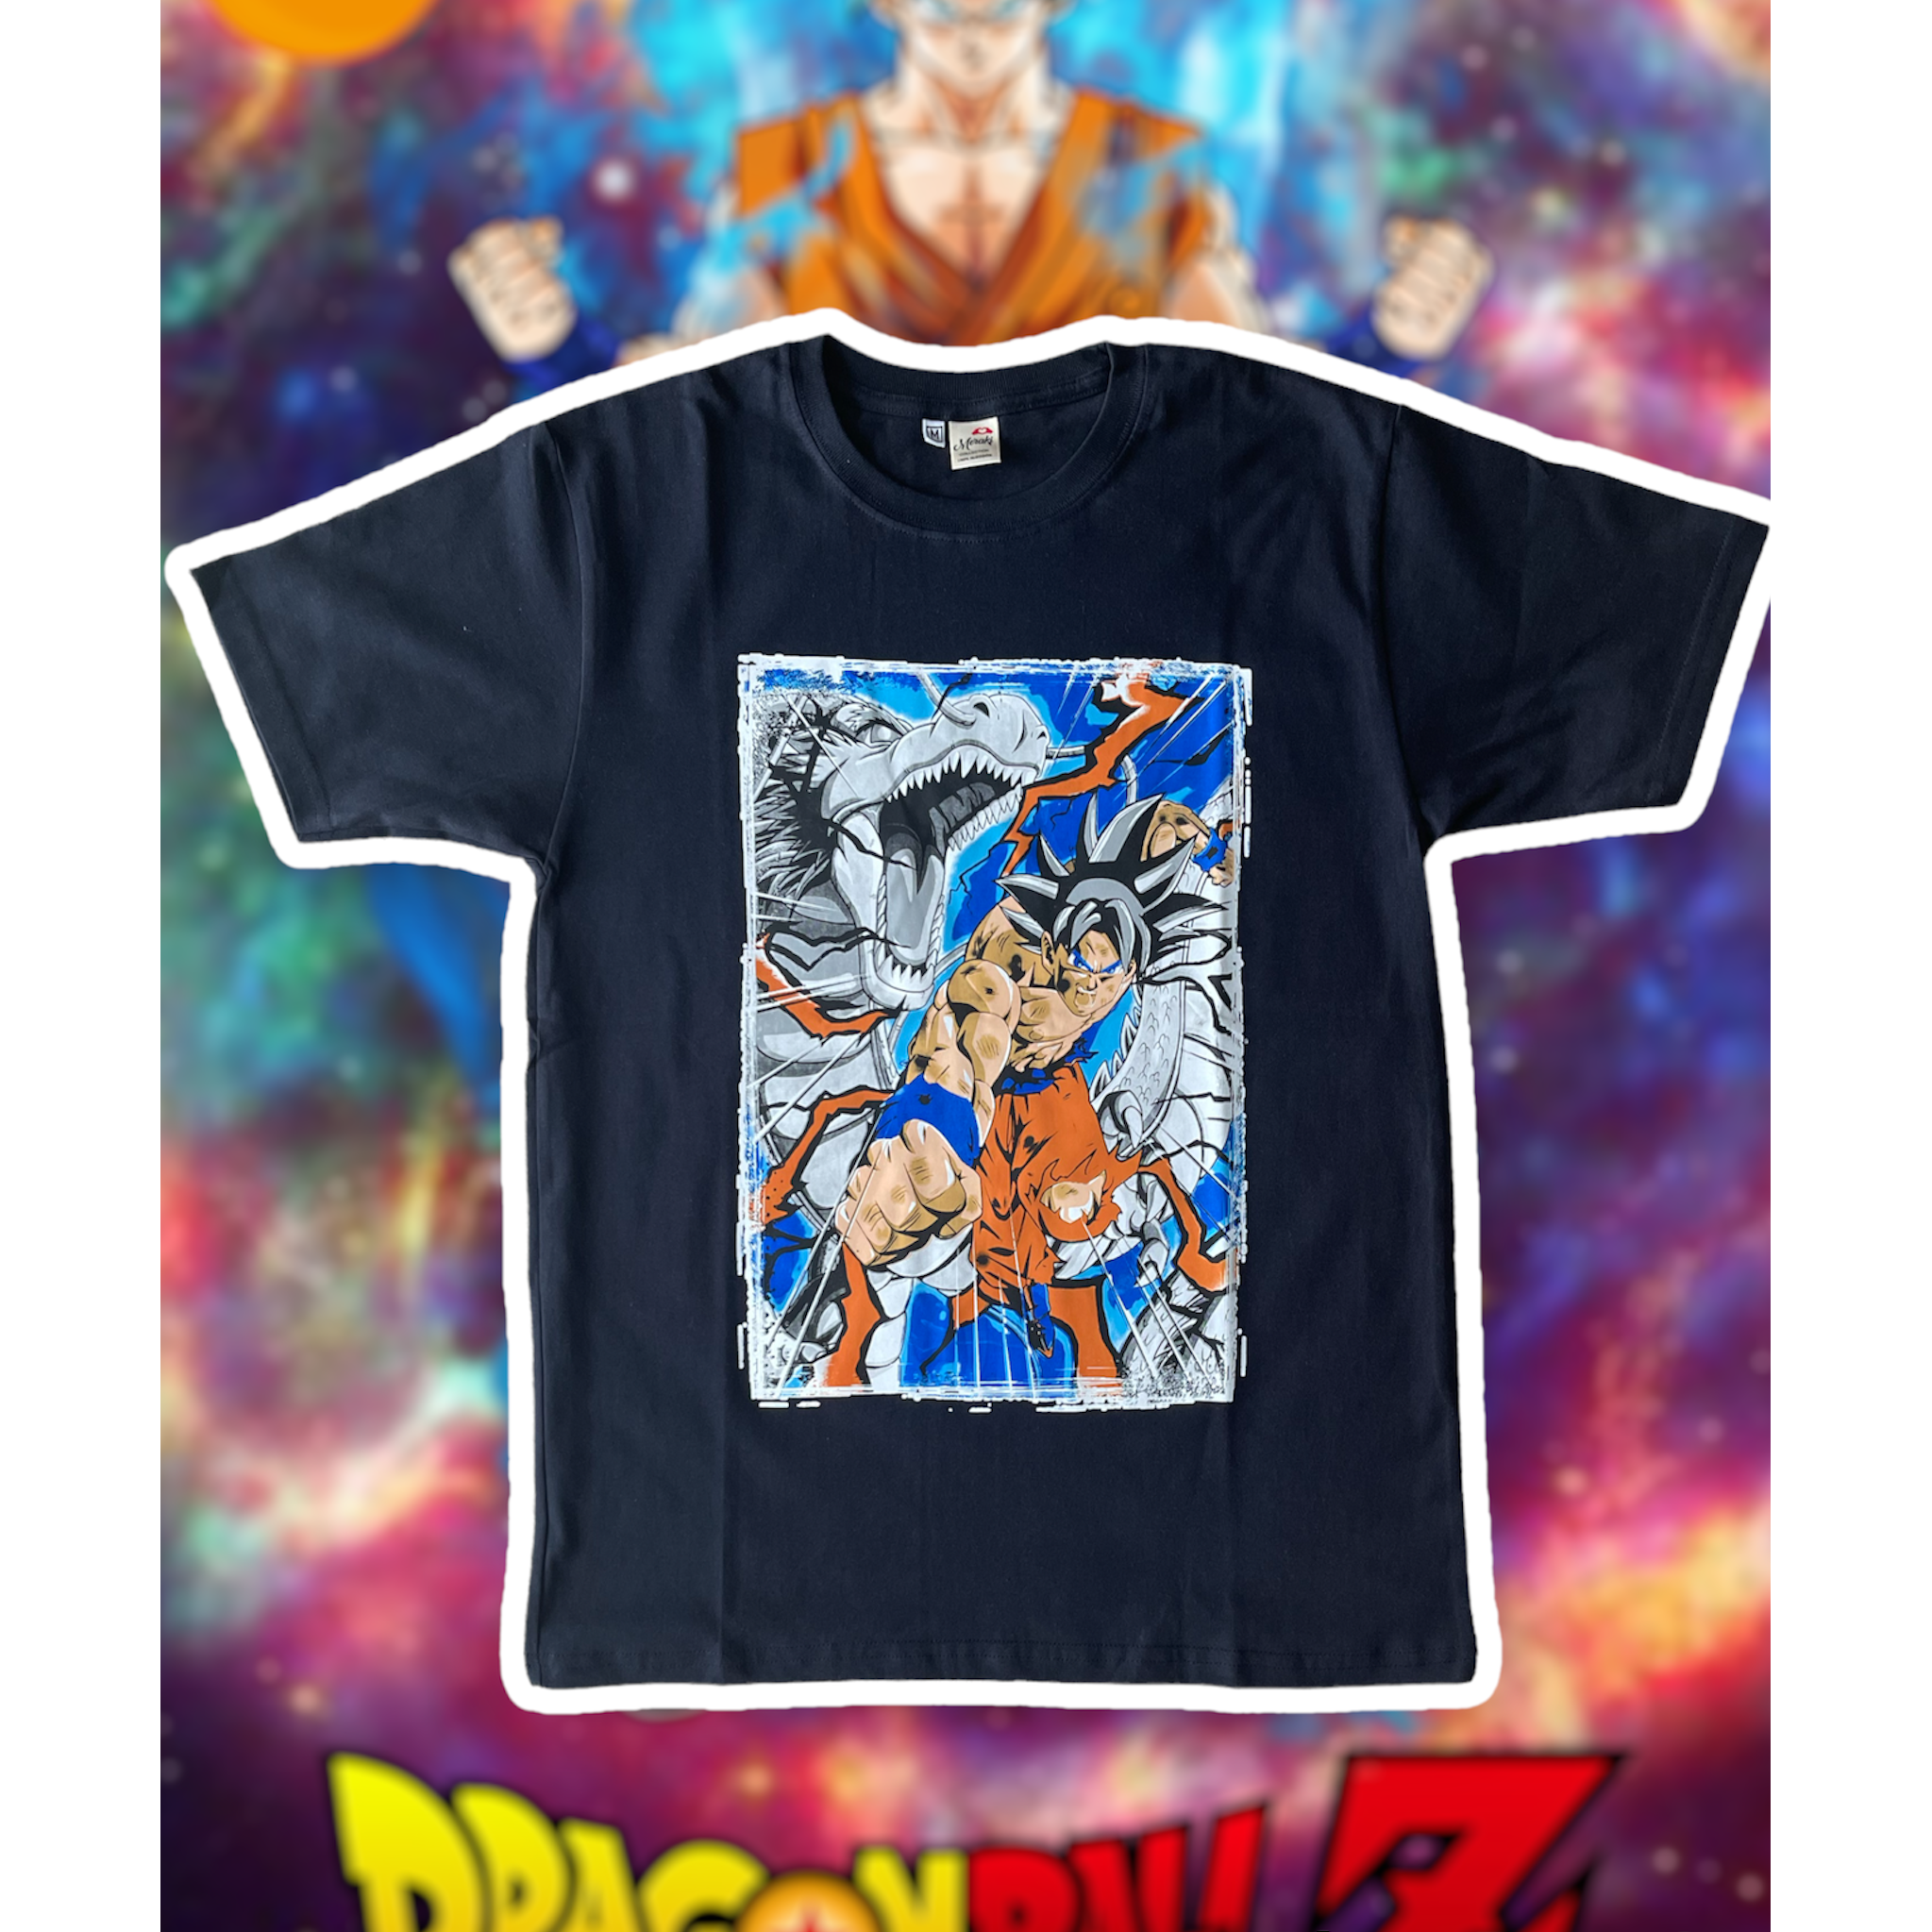 T-shirt modelo Dragon ball Z